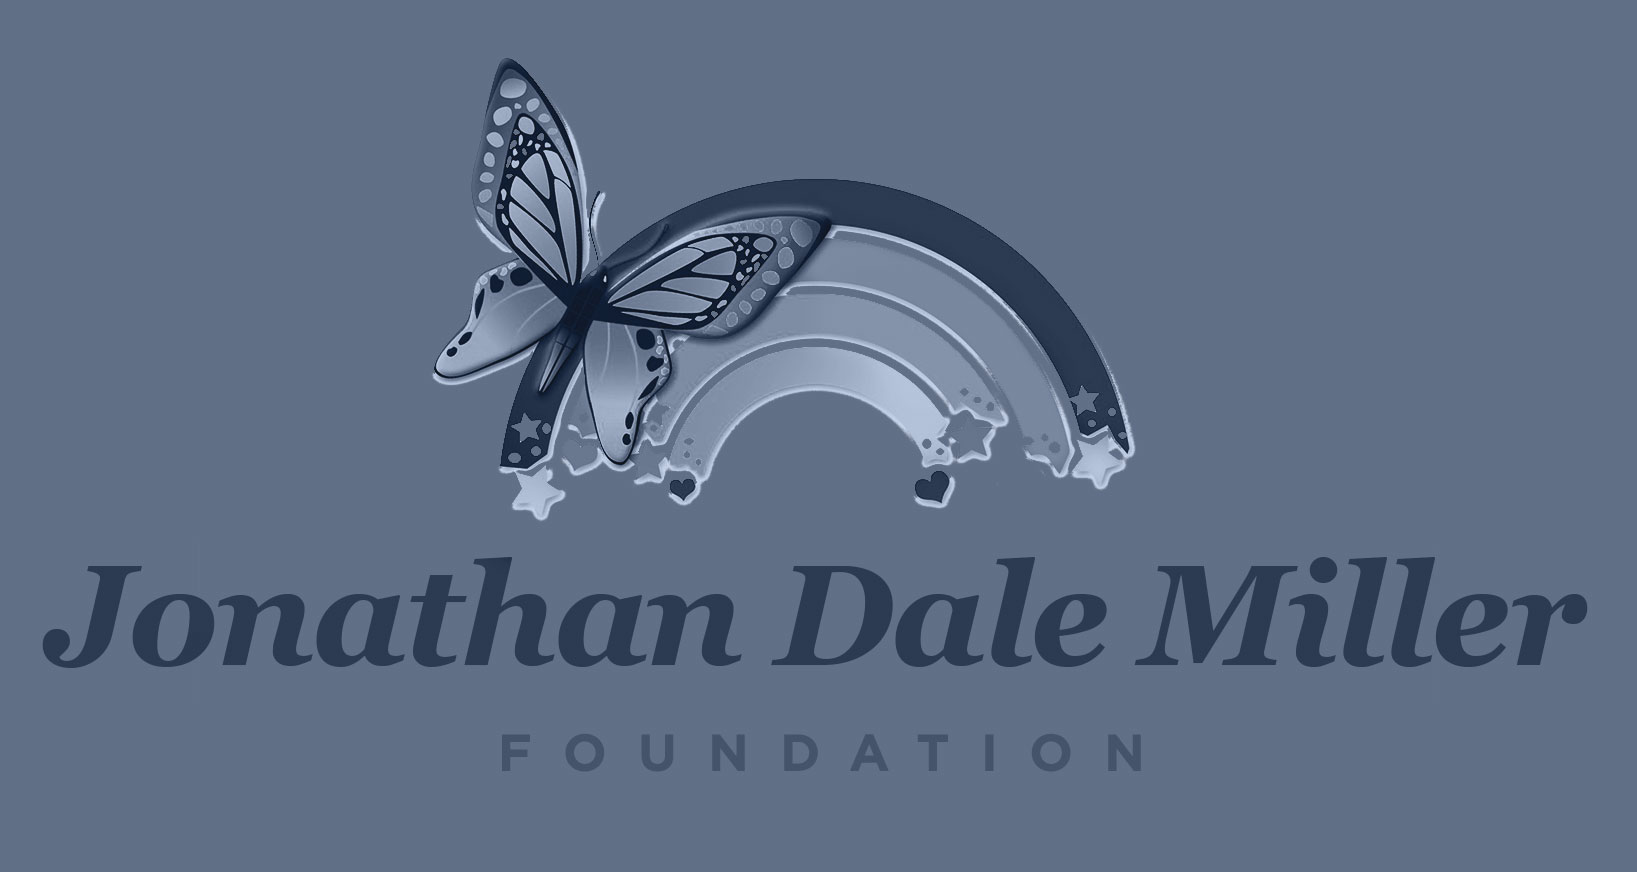 Jonathan Dale Miller Foundation